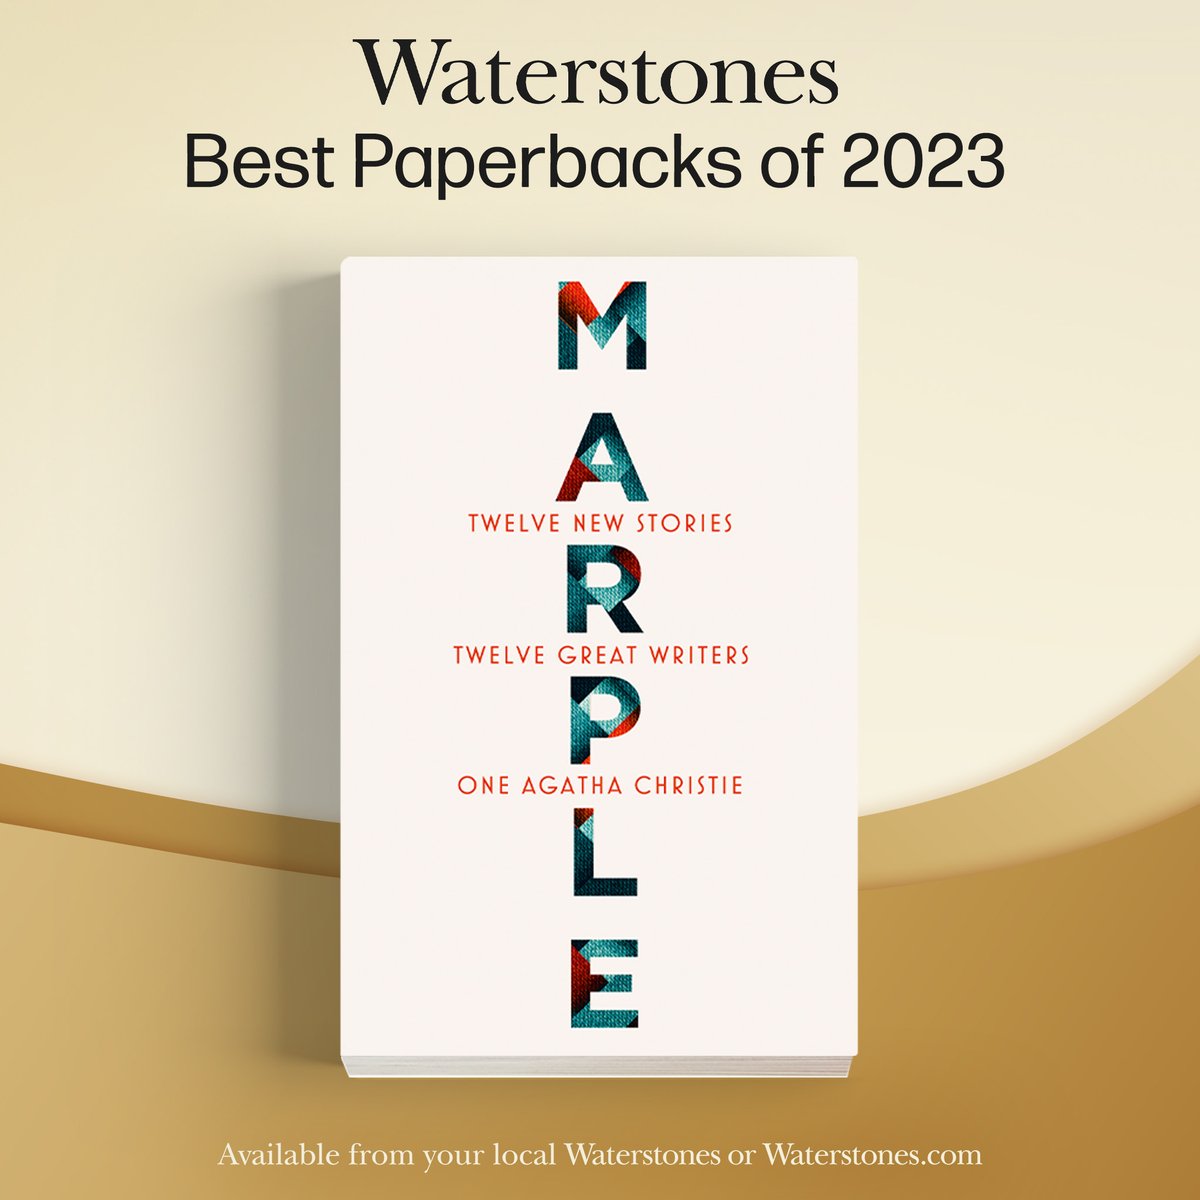 🎉Marple is a @Waterstones Best Paperback of 2023! Congratulations to our 12 #Marple authors: @NaomiAllthenews @LBardugo @AlyssaColeLit @lucyfoleytweets @ellygriffiths @officialnhaynes @JeanKwok @valmcdermid @writerkmc @DredaMBE @katemosse @RuthWareWriter @agathachristie